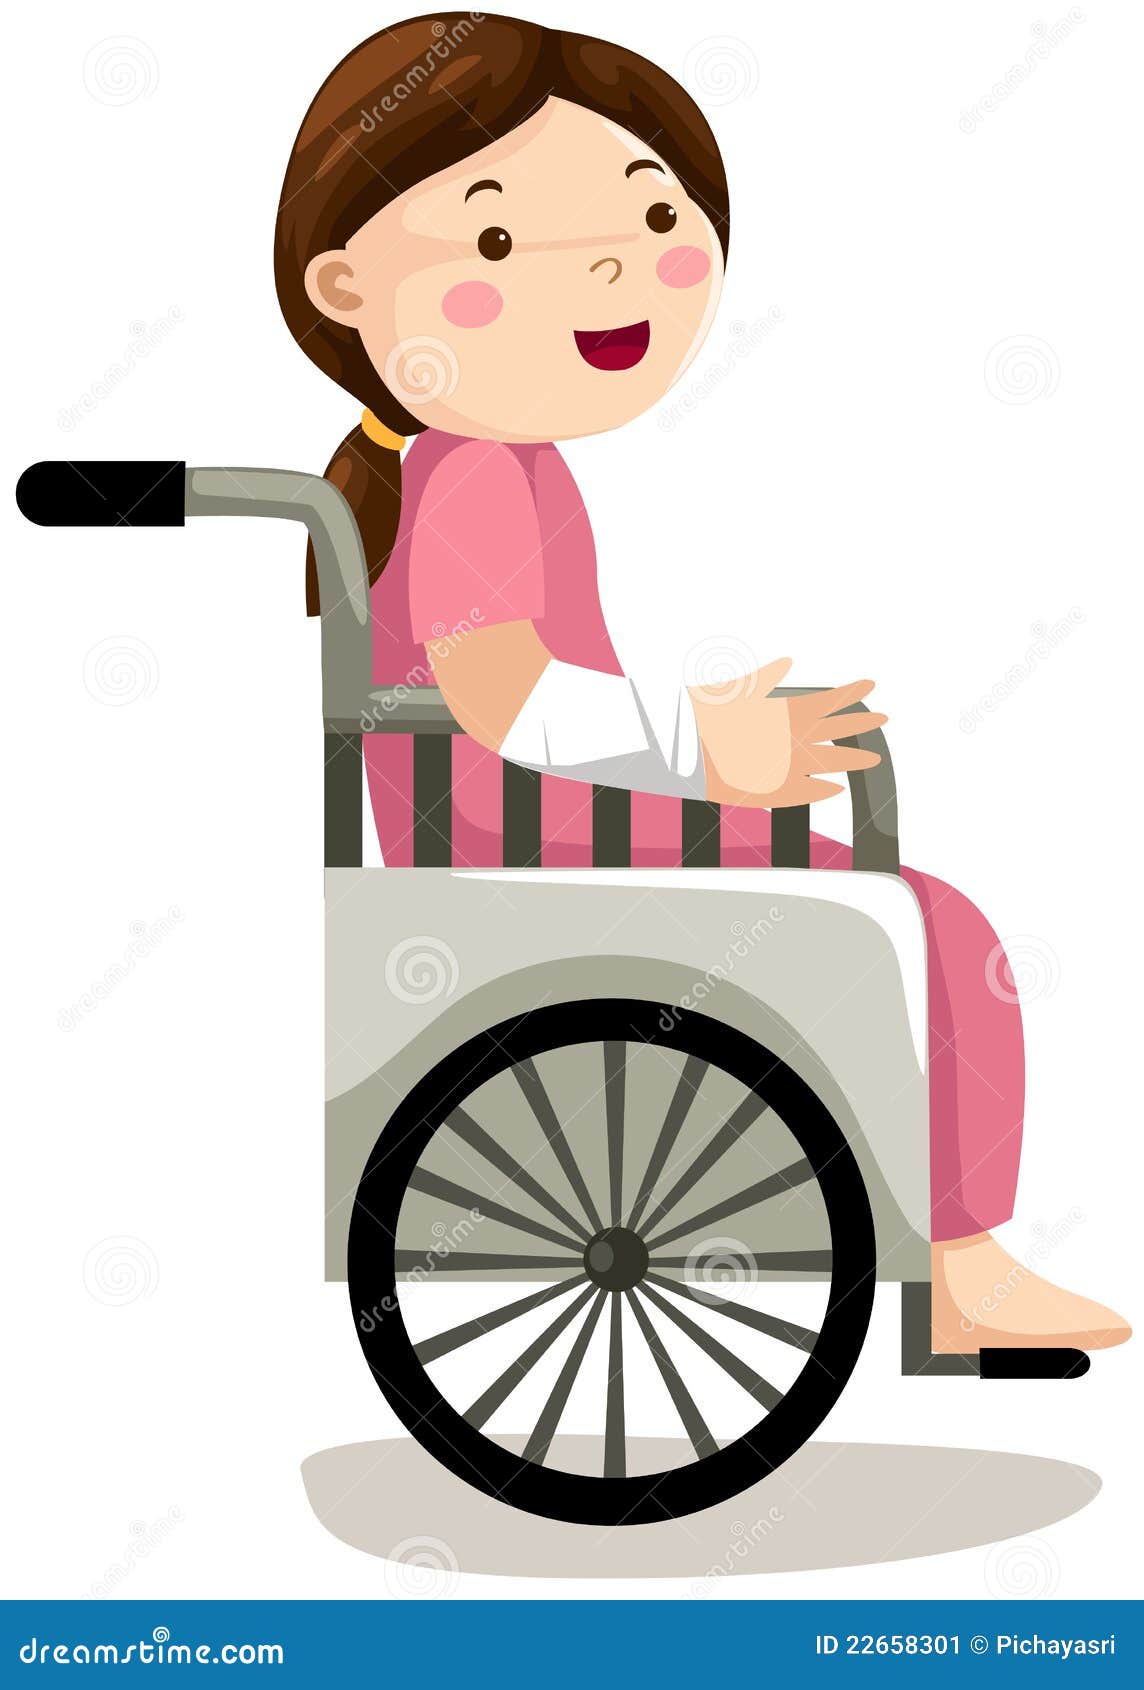 clipart girl in wheelchair - photo #4